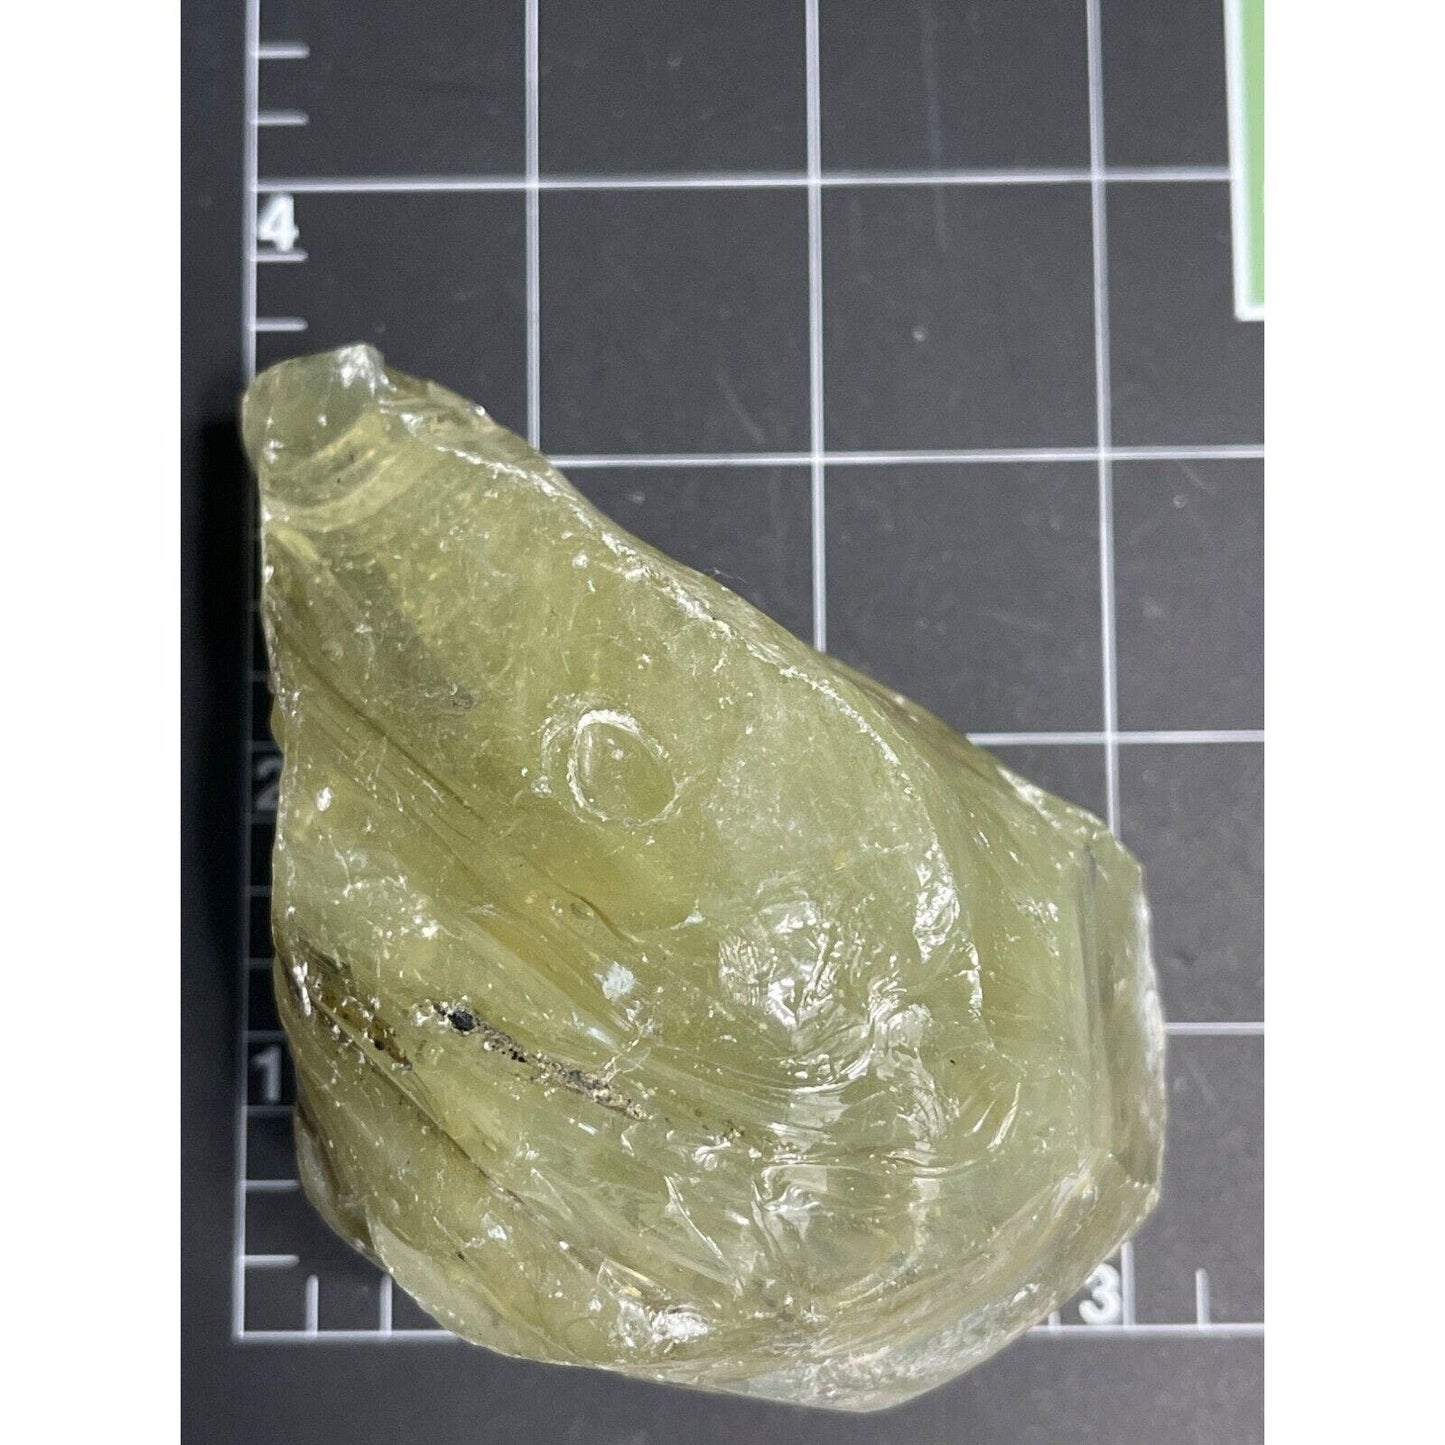 Vaseline Art Glass Cullet Multitone Glowing Premium Swirl Slag Uranium #GLXL2379